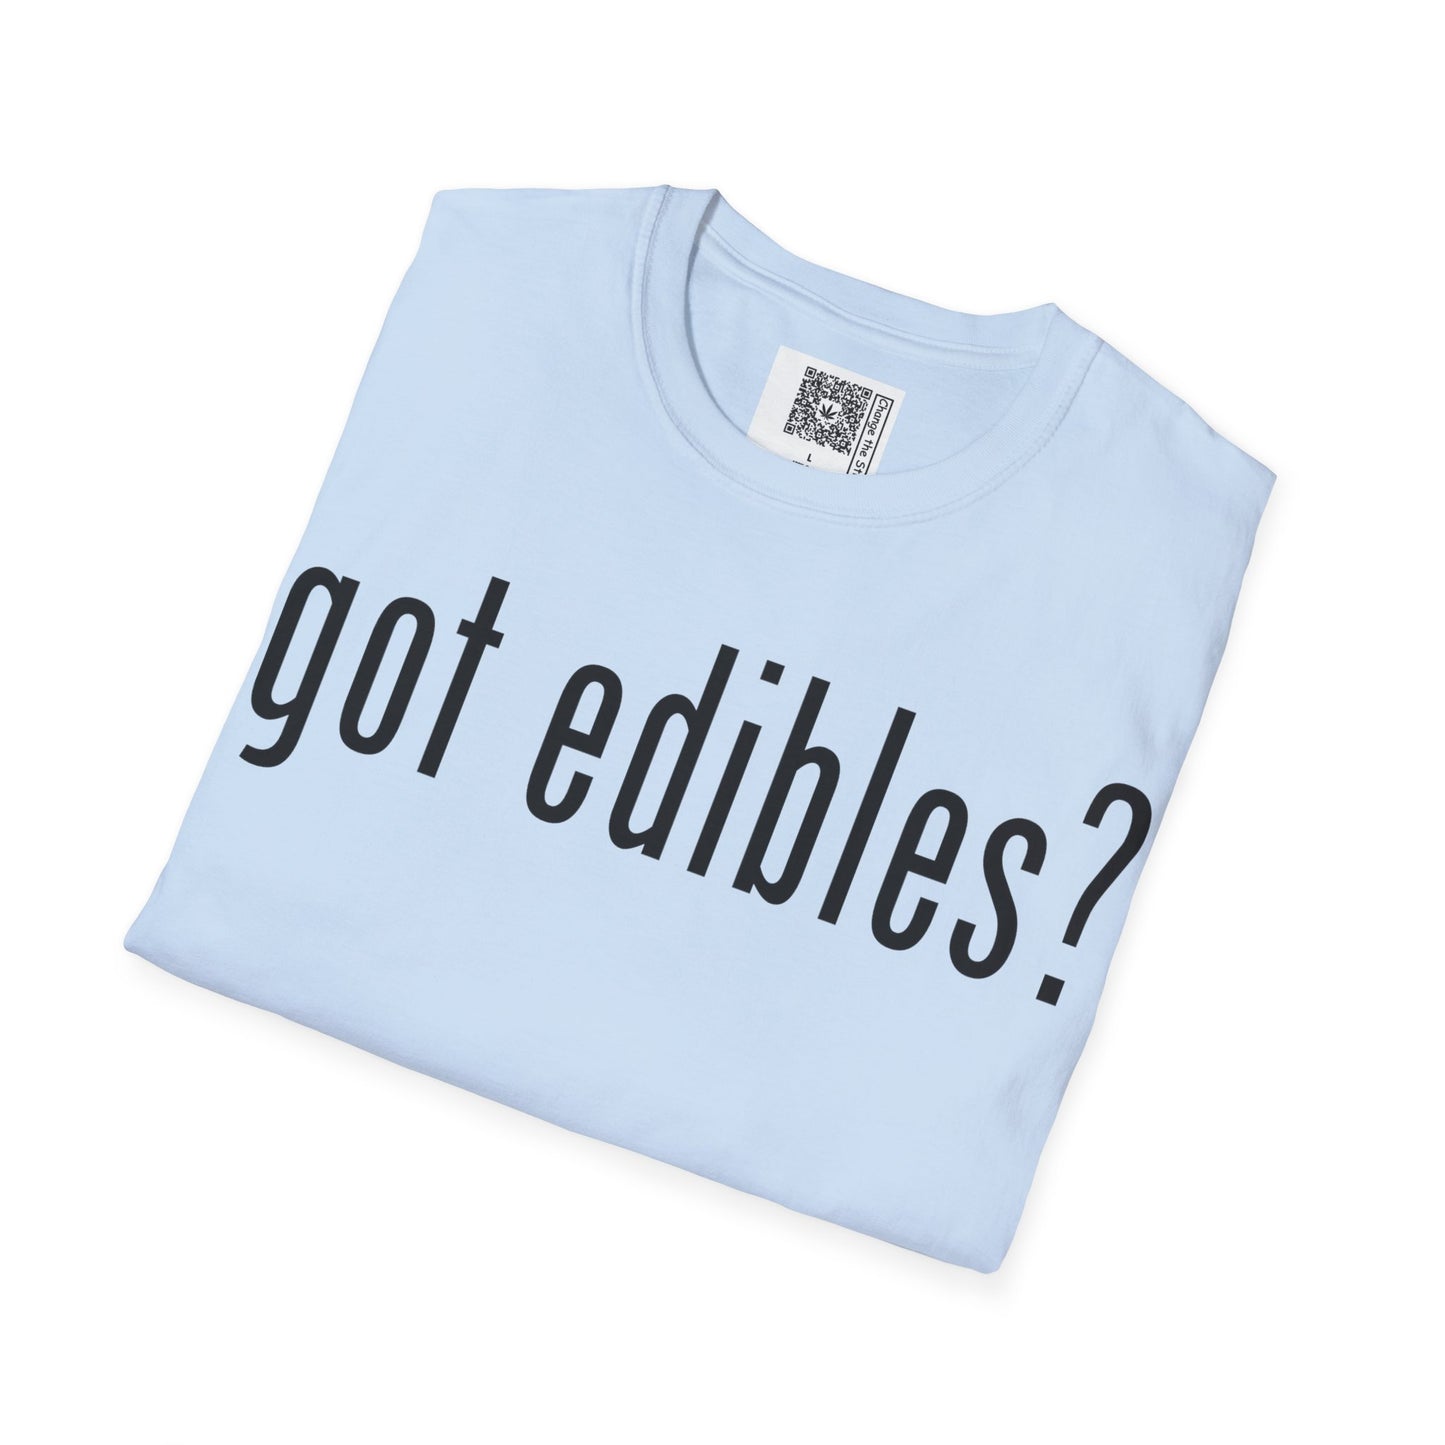 Change the Stigma GOT EDIBLES Weed Shirt